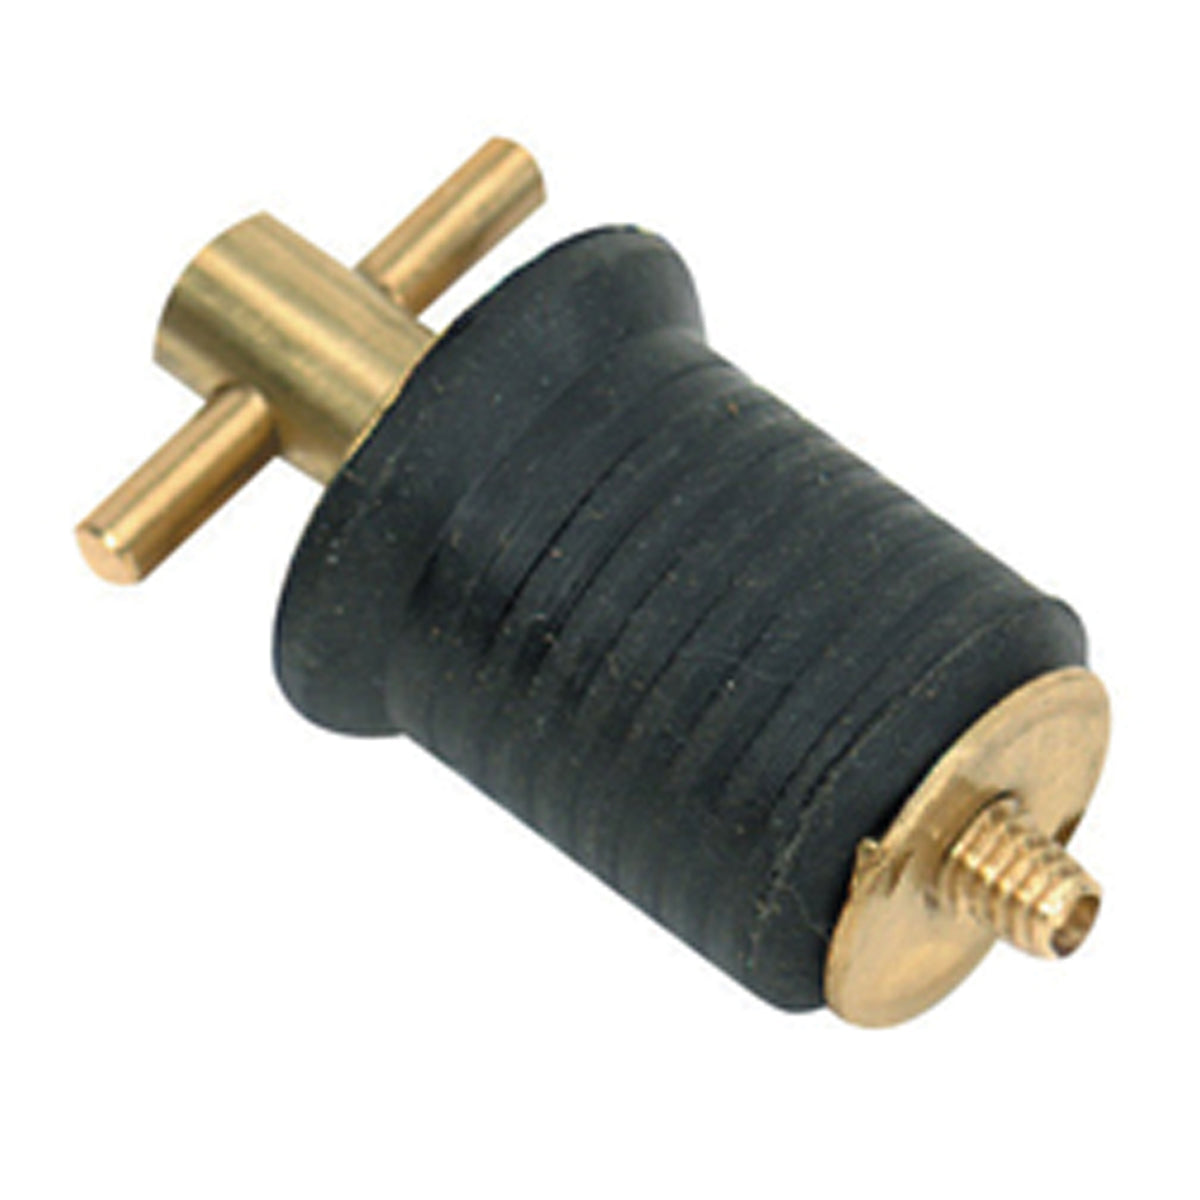 Moeller 020899-10 Turn-Tite Brass Bailer Plug - 1", Each